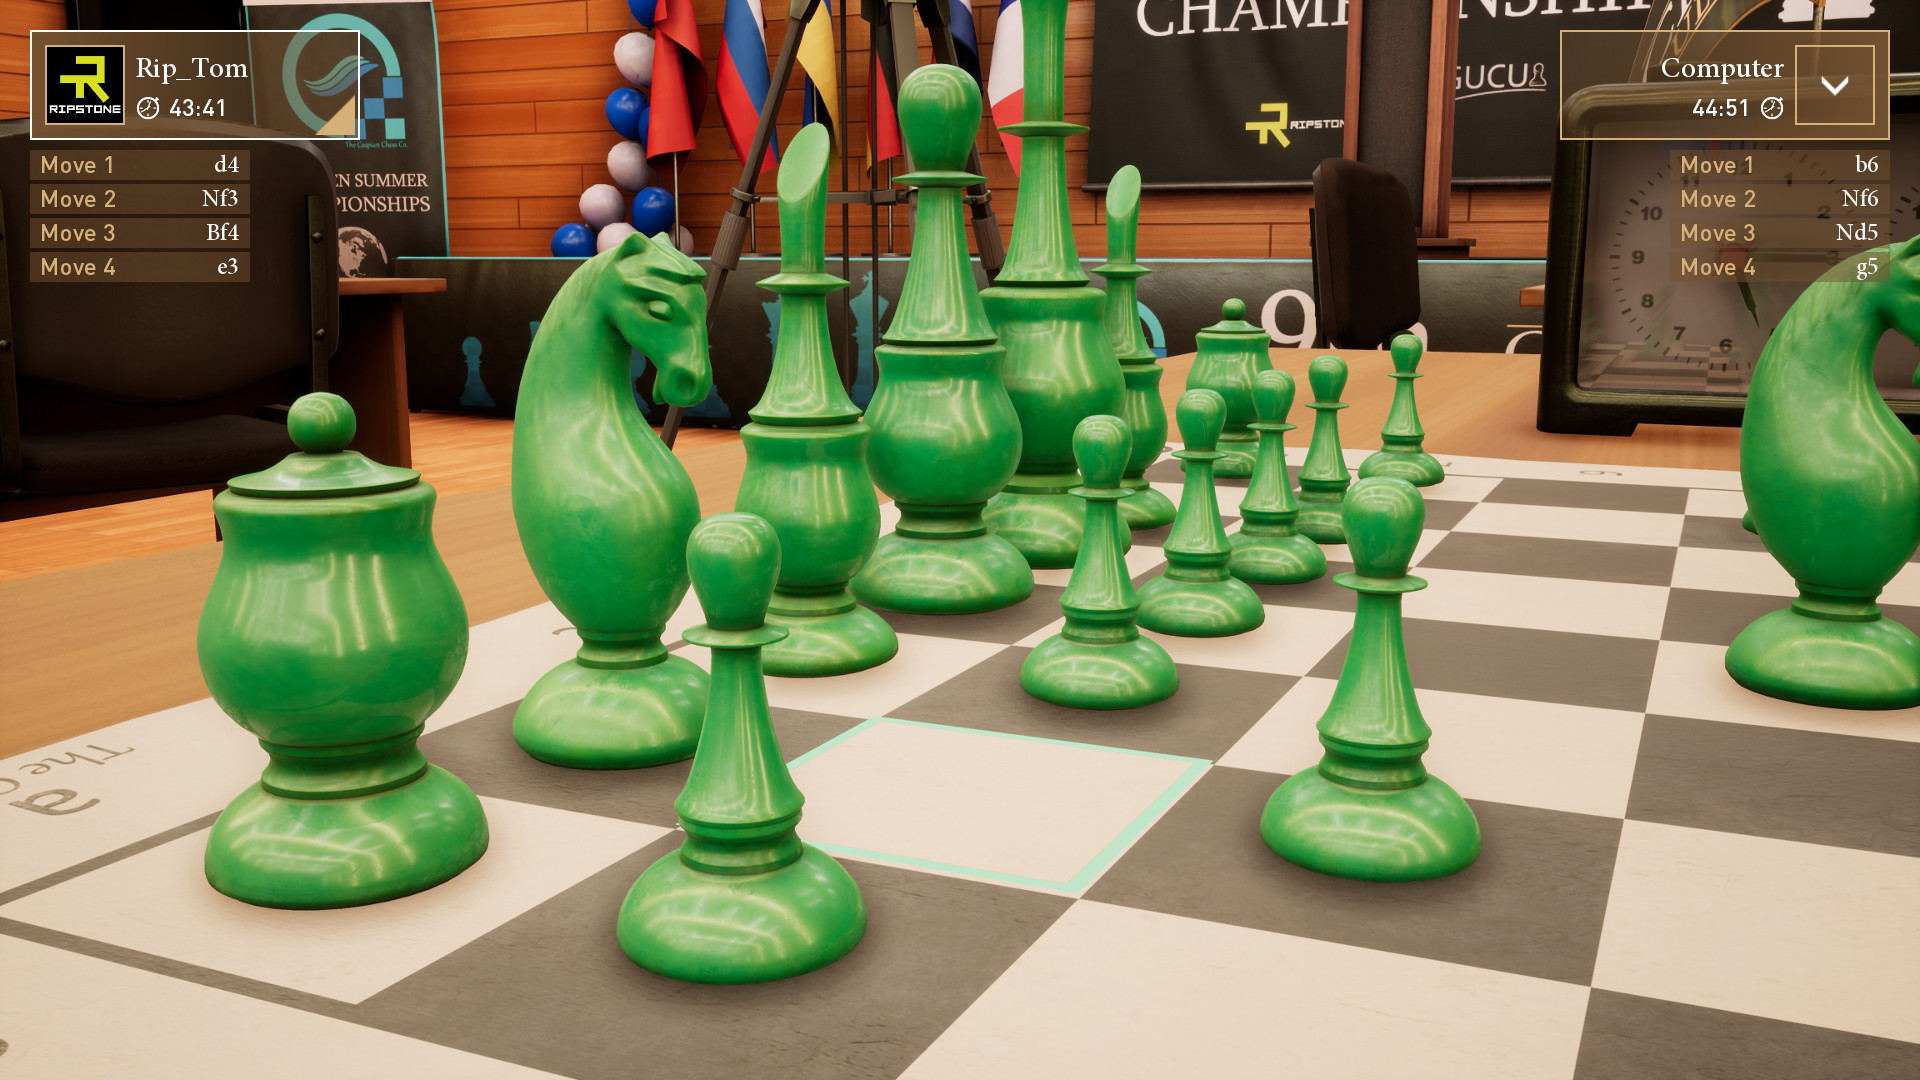 Buy Chess Ultra, PC - Steam